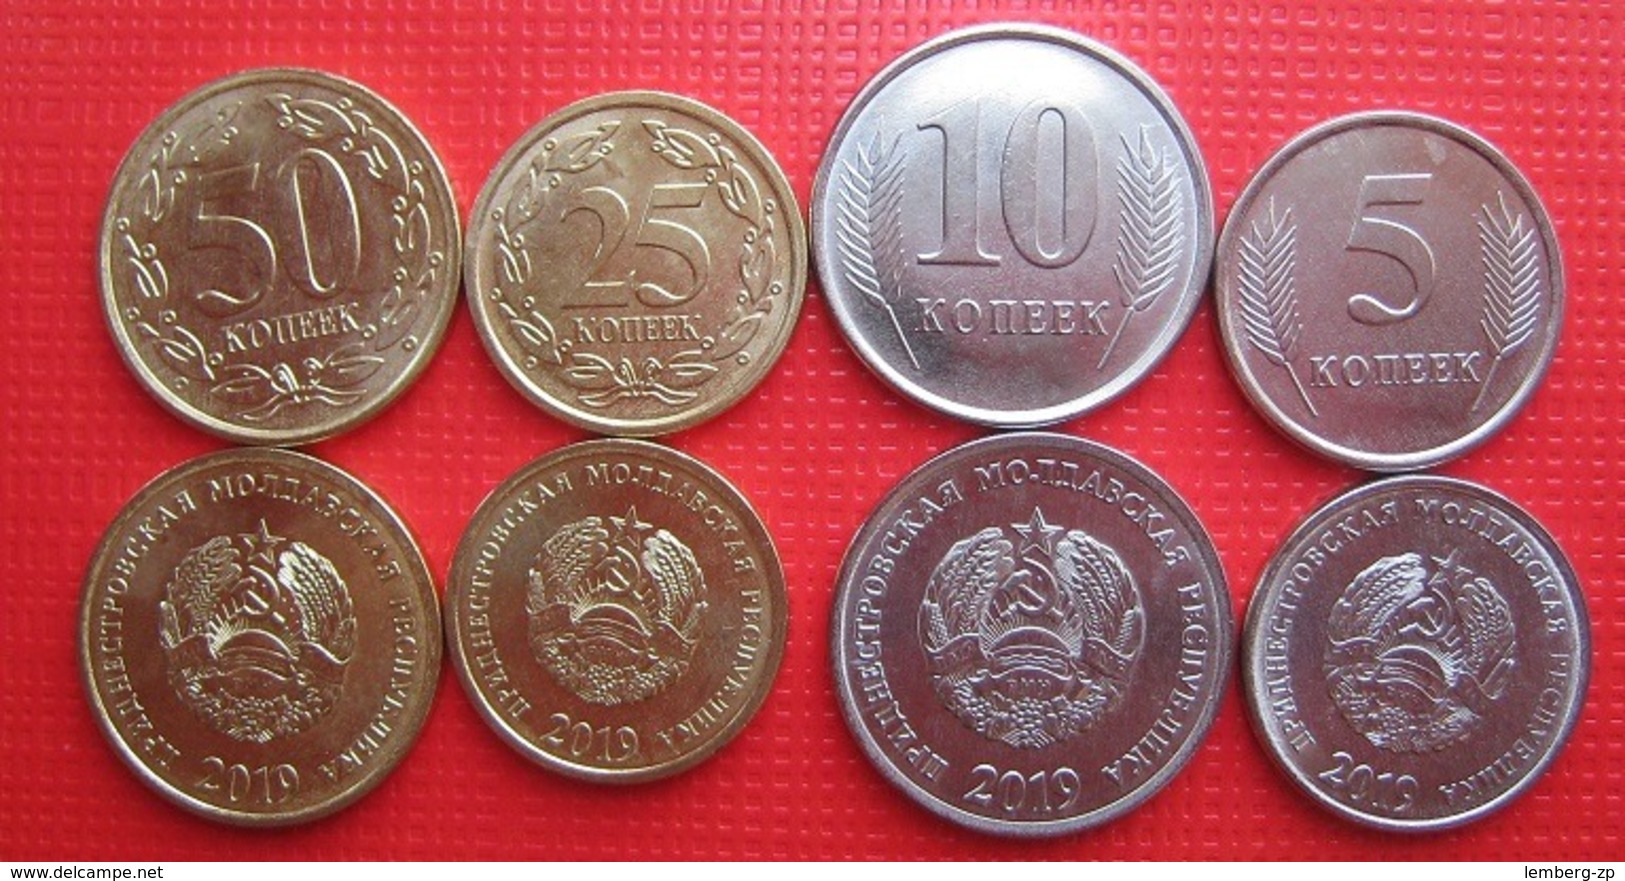 Transnistria - Set 4 Coins 5 10 25 50 Kopecks 2019 UNC Magnetic Lemberg-Zp - Moldavia